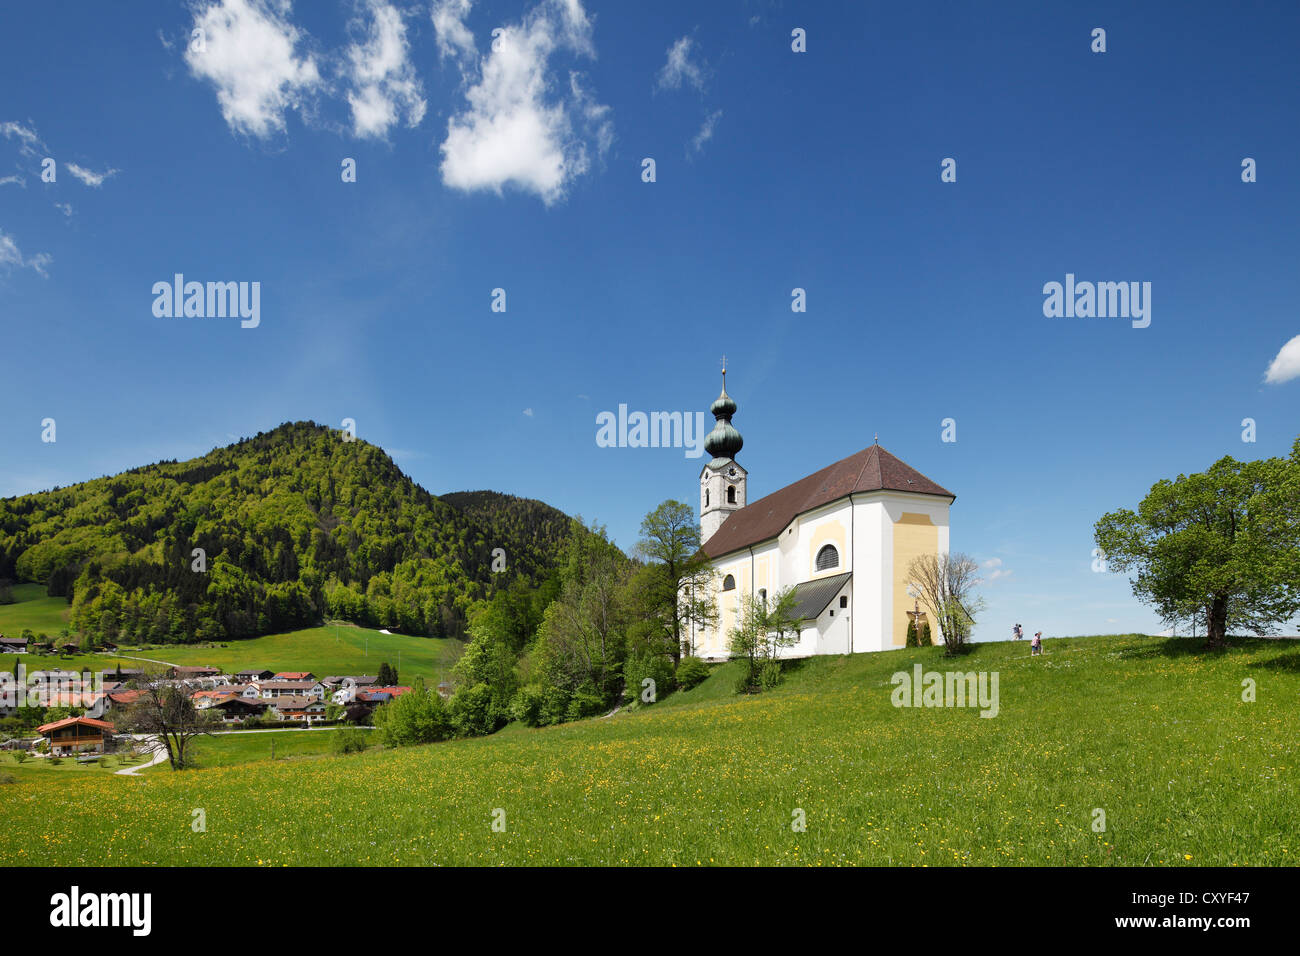 Parish Church of St. Georg, Ruhpolding, Chiemgau Alps, Chiemgau region, Upper Bavaria, Bavaria Stock Photo